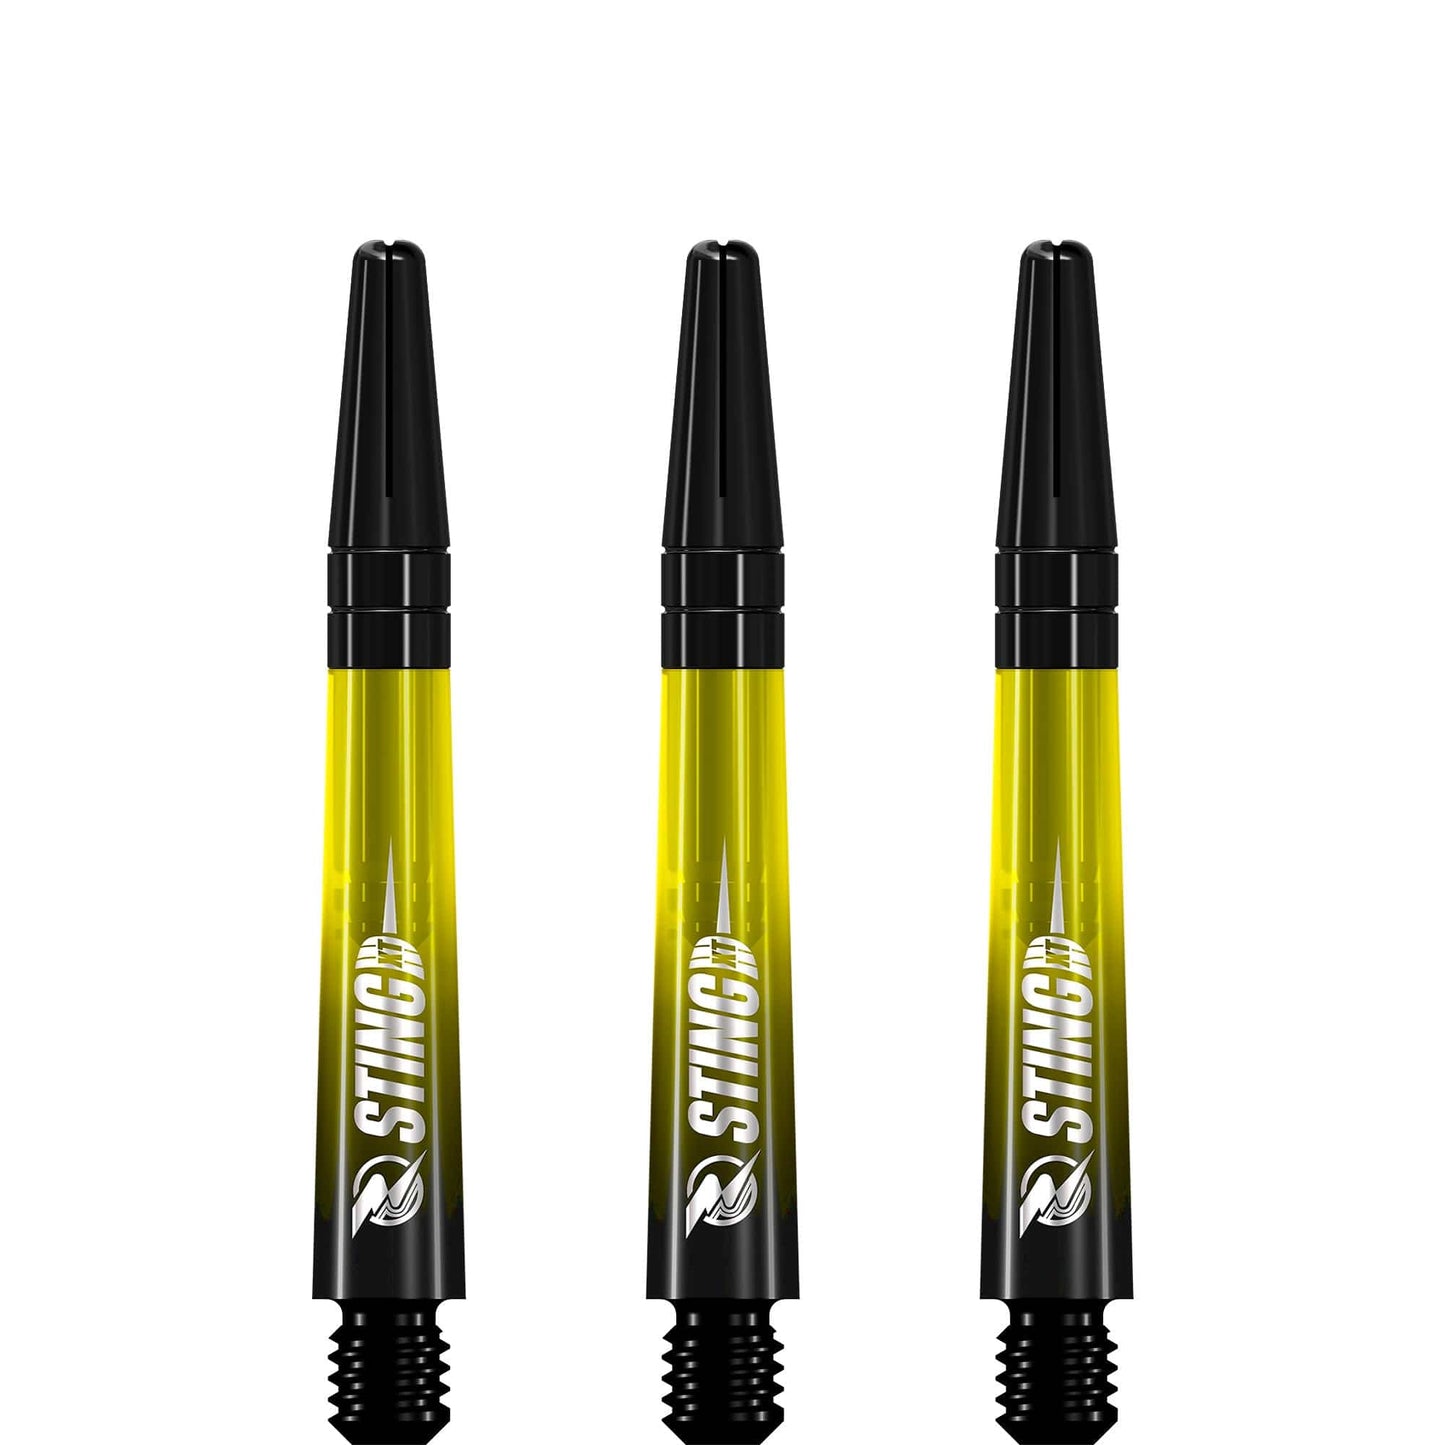 Ruthless Sting XT Dart Shafts - Polycarbonate - Gradient Black & Yellow - Black Top Tweenie